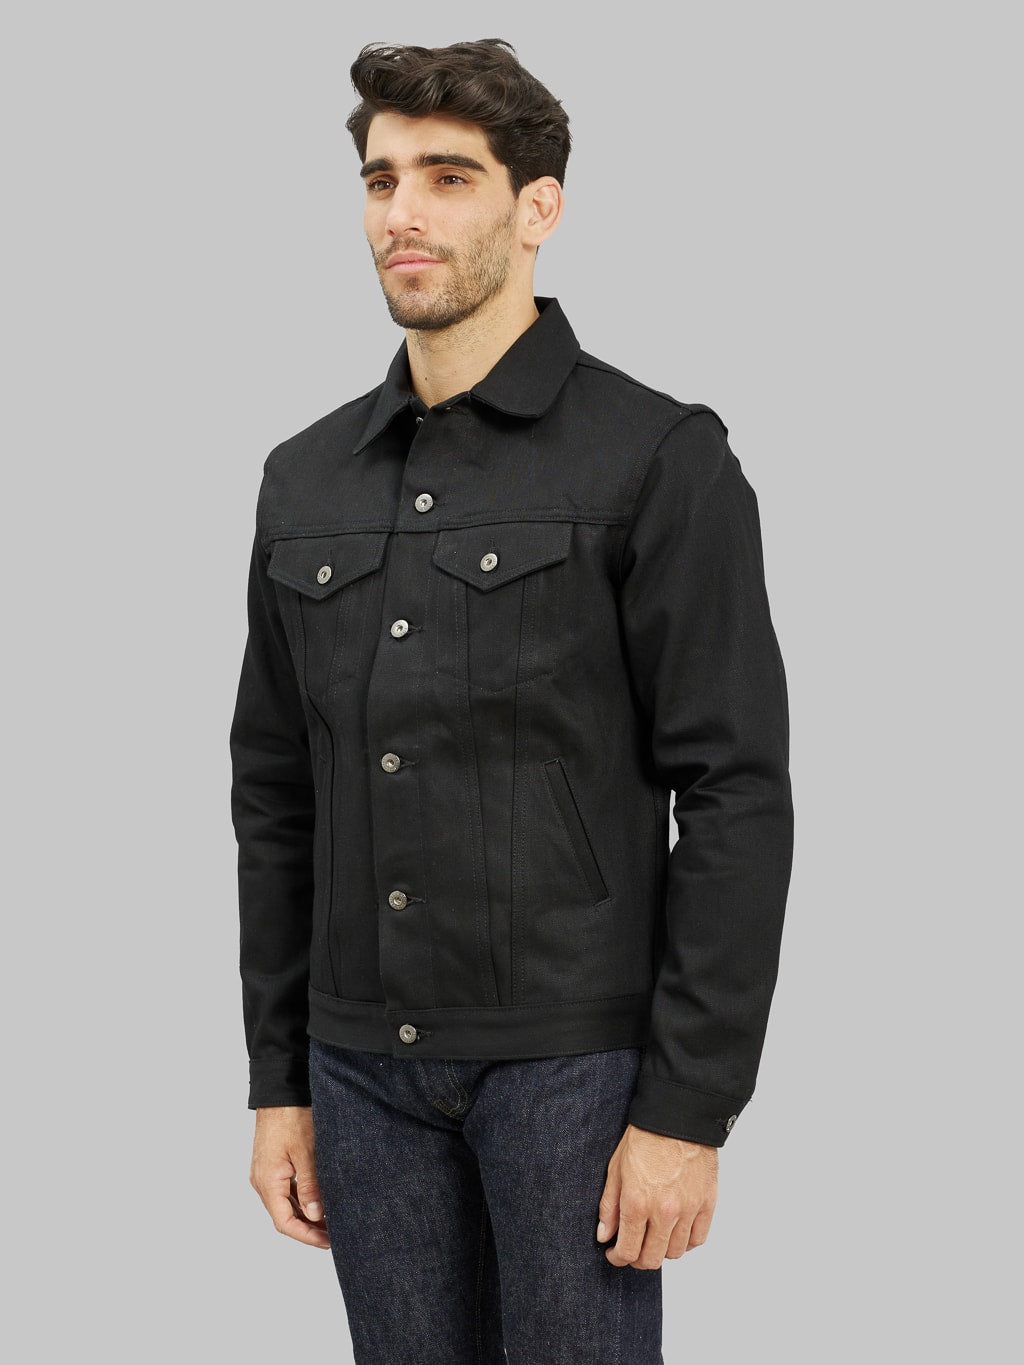 3sixteen type III denim jacket double black selvedge side fit